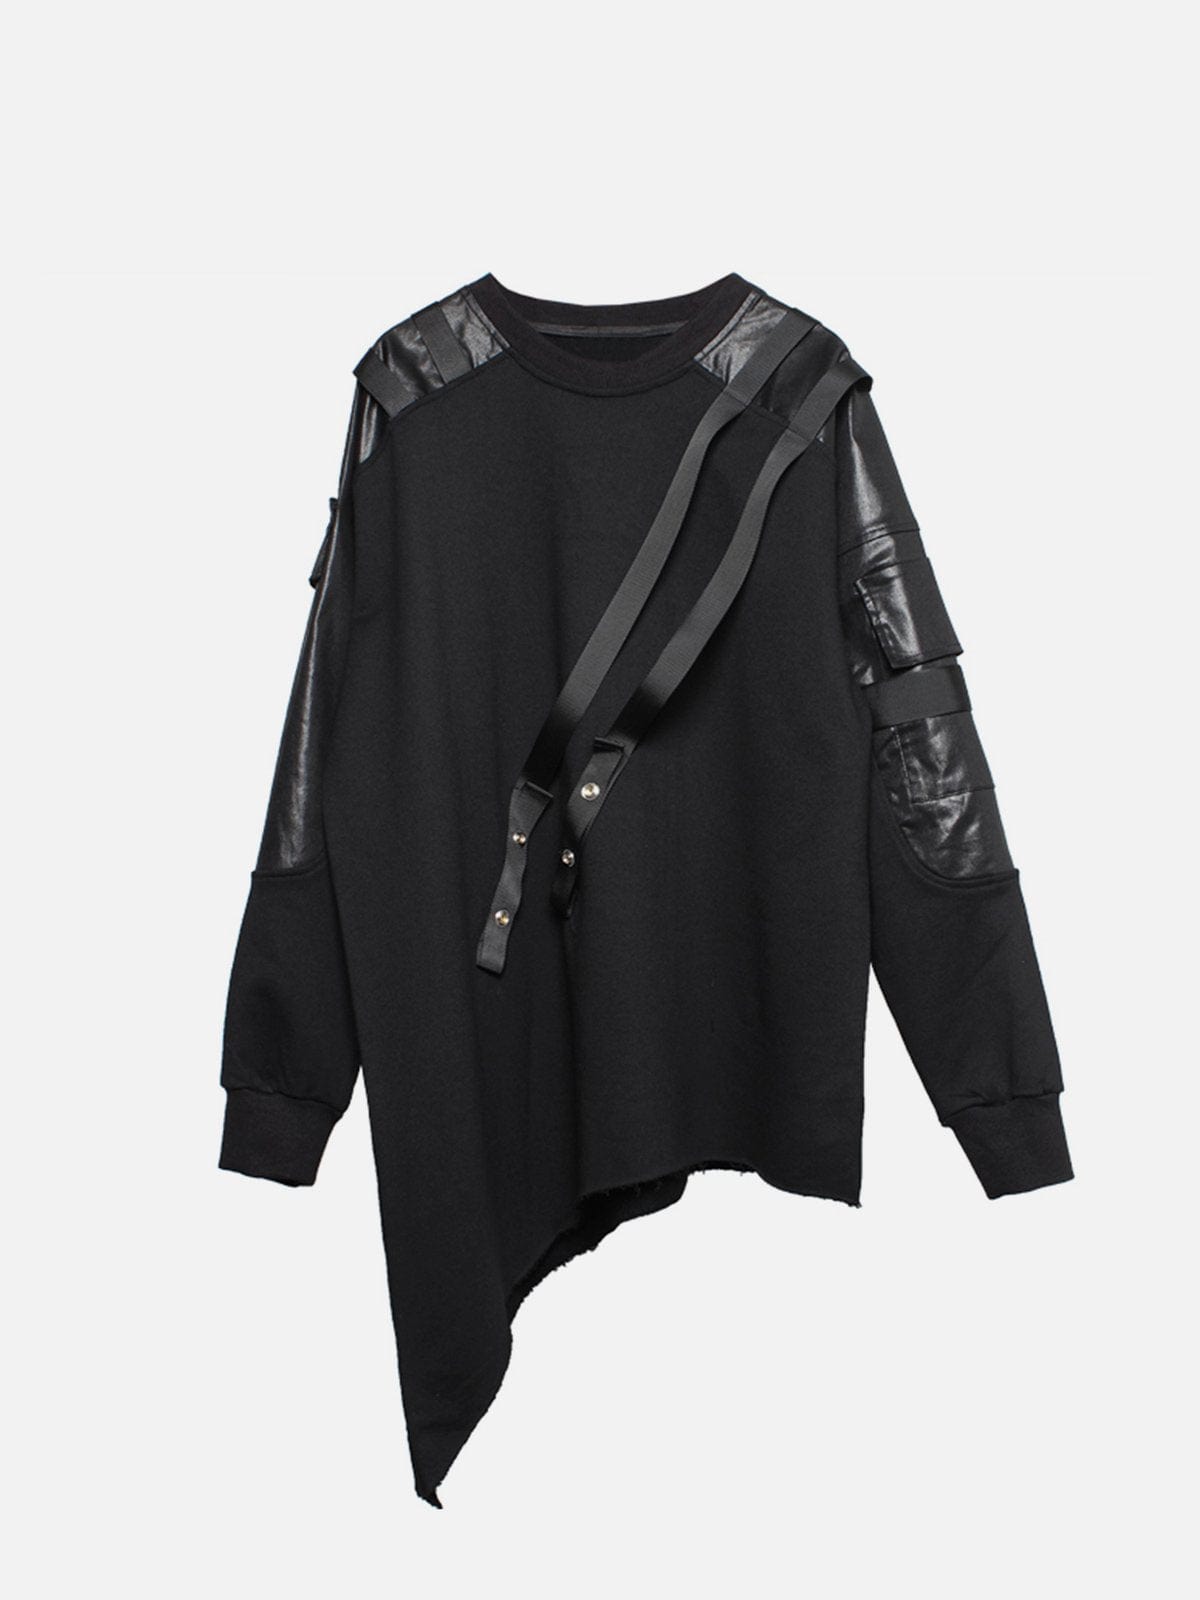 Asymmetric Patchwork Sweatshirt Streetwear Brand Techwear Combat Tactical YUGEN THEORY